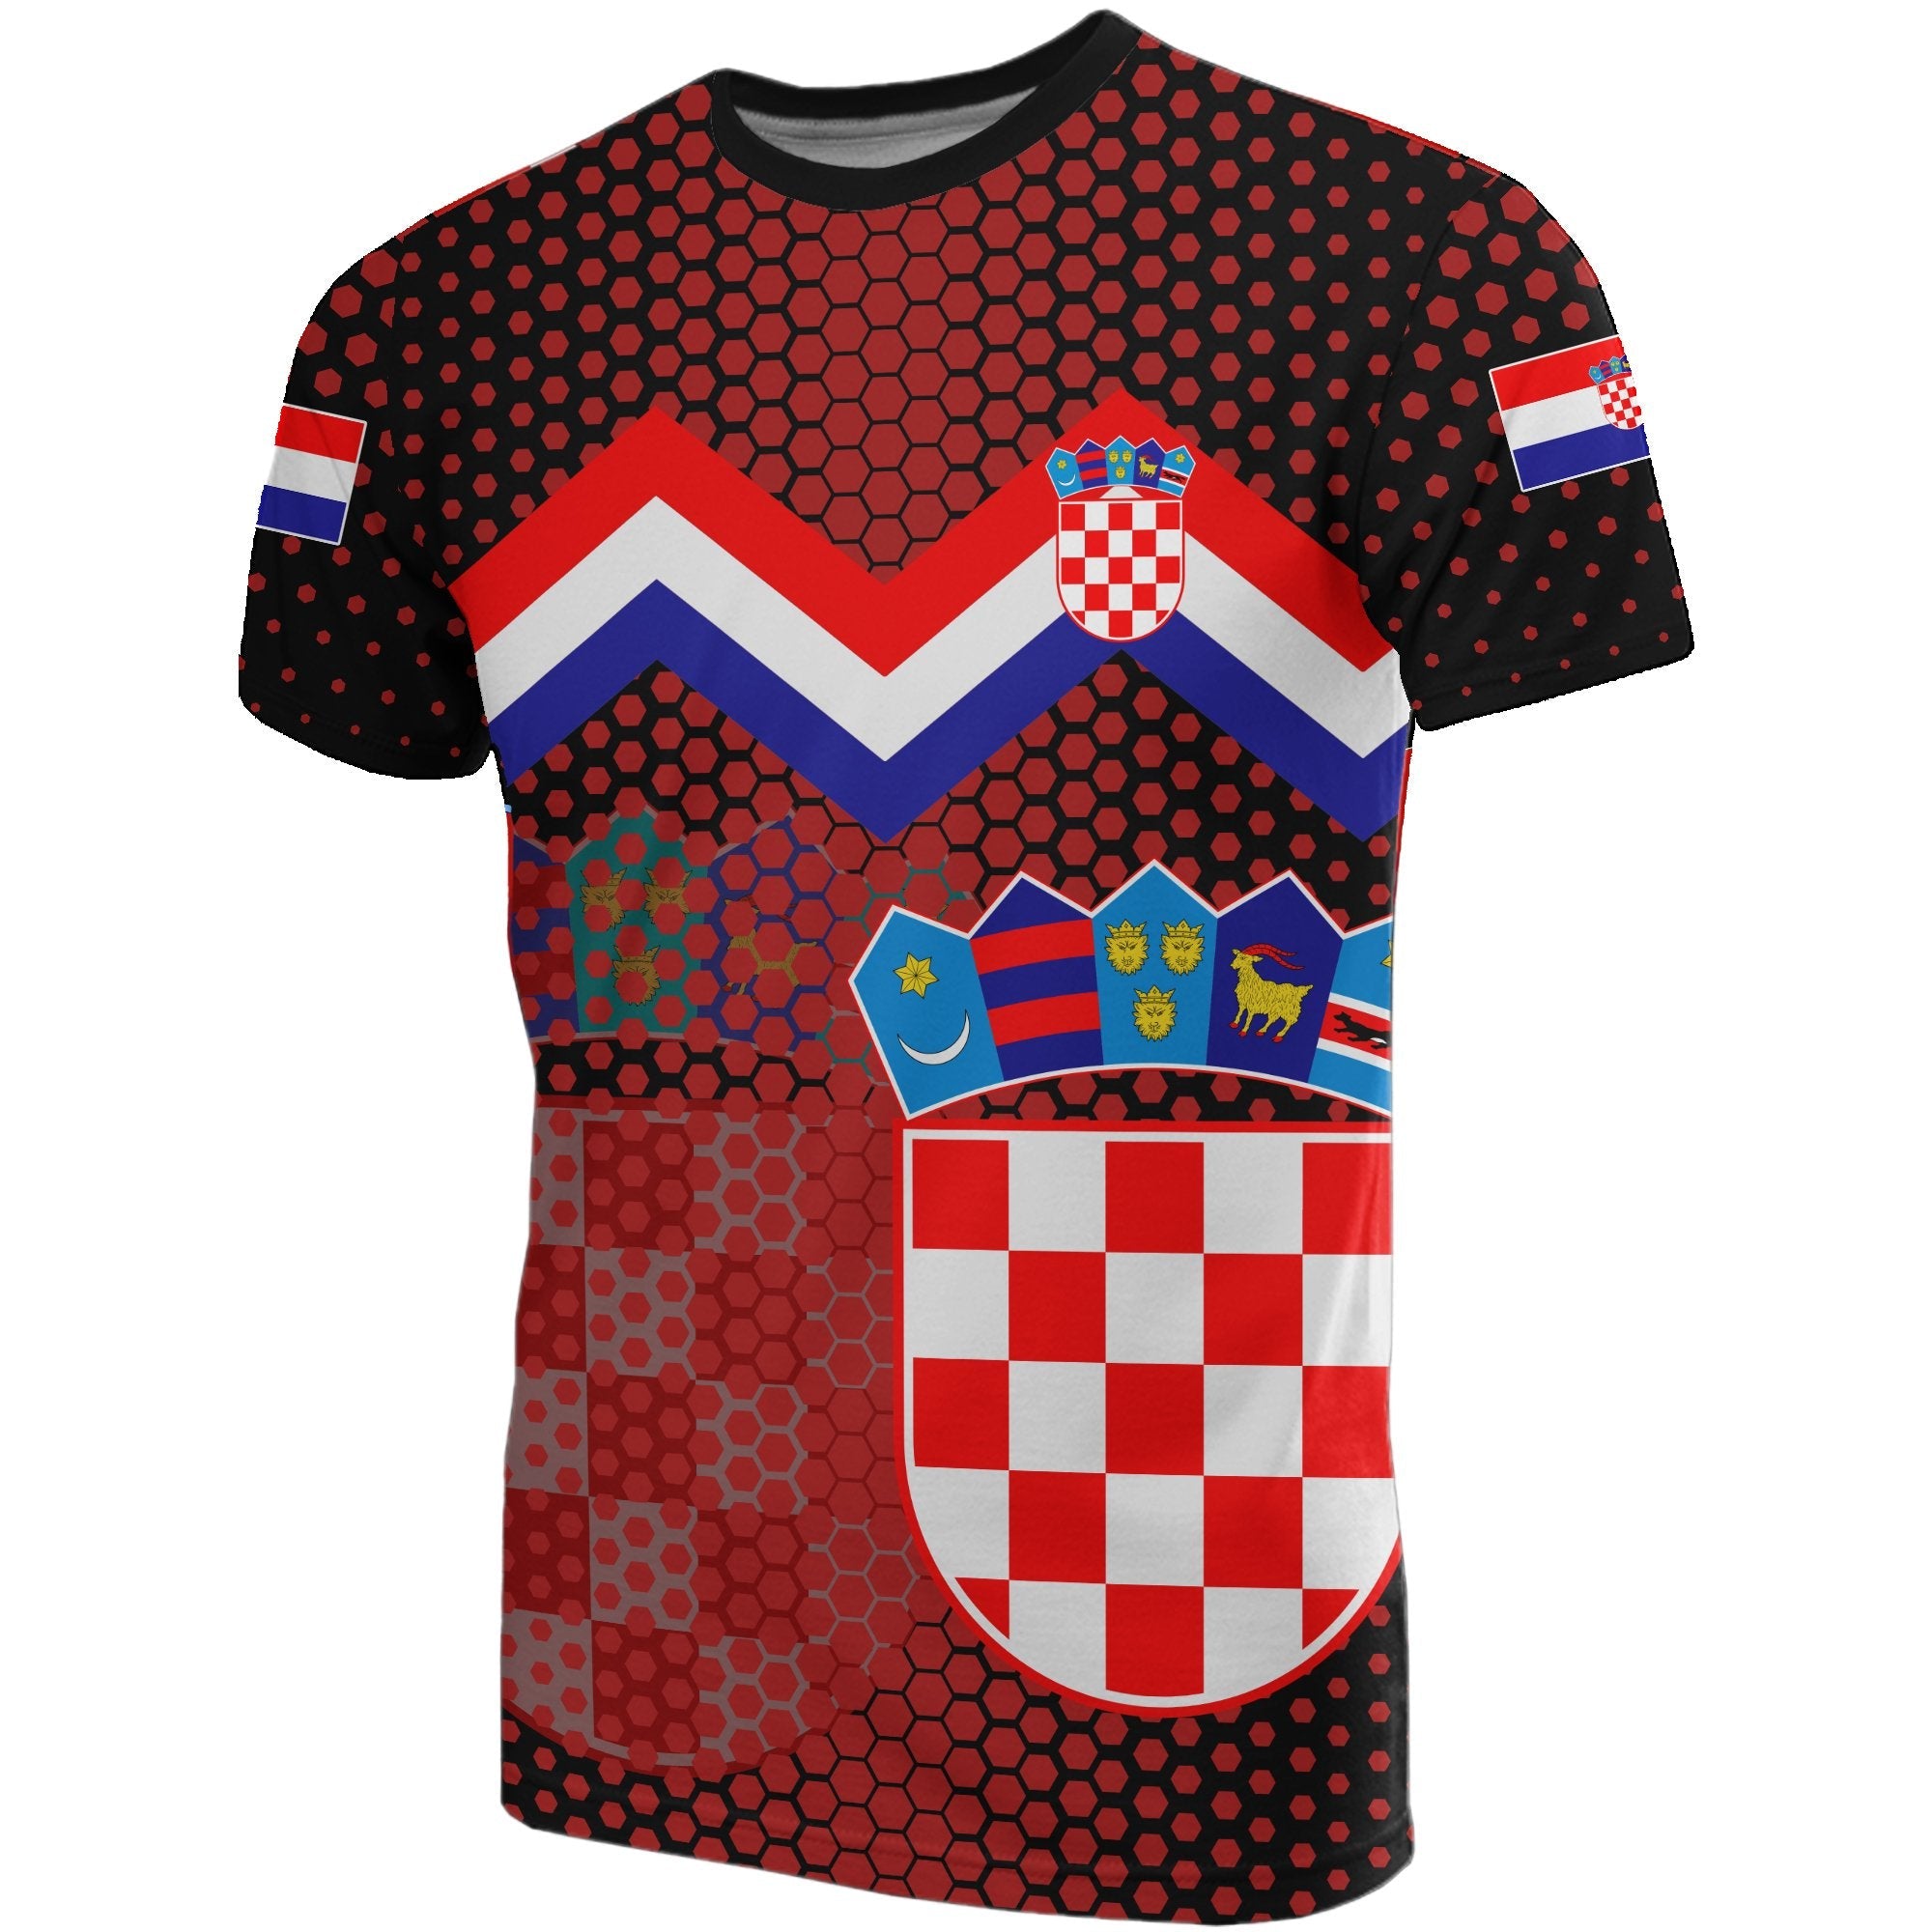 hrvatska-croatia-coat-of-arms-t-shirt-black-2nd